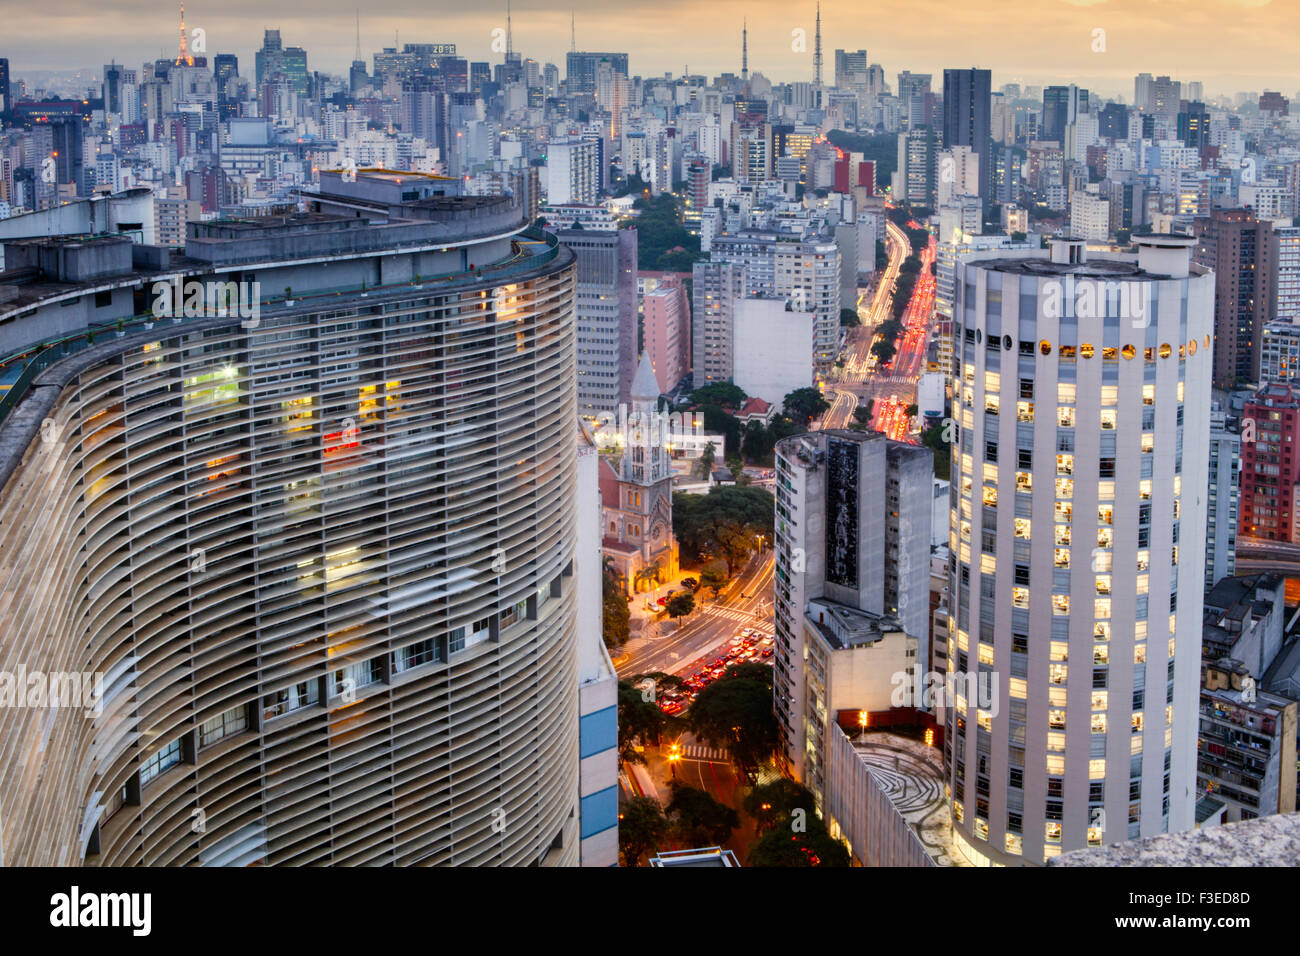 Niemeyer's Edificio Copan and the skyline of central Sao Paulo Stock Photo